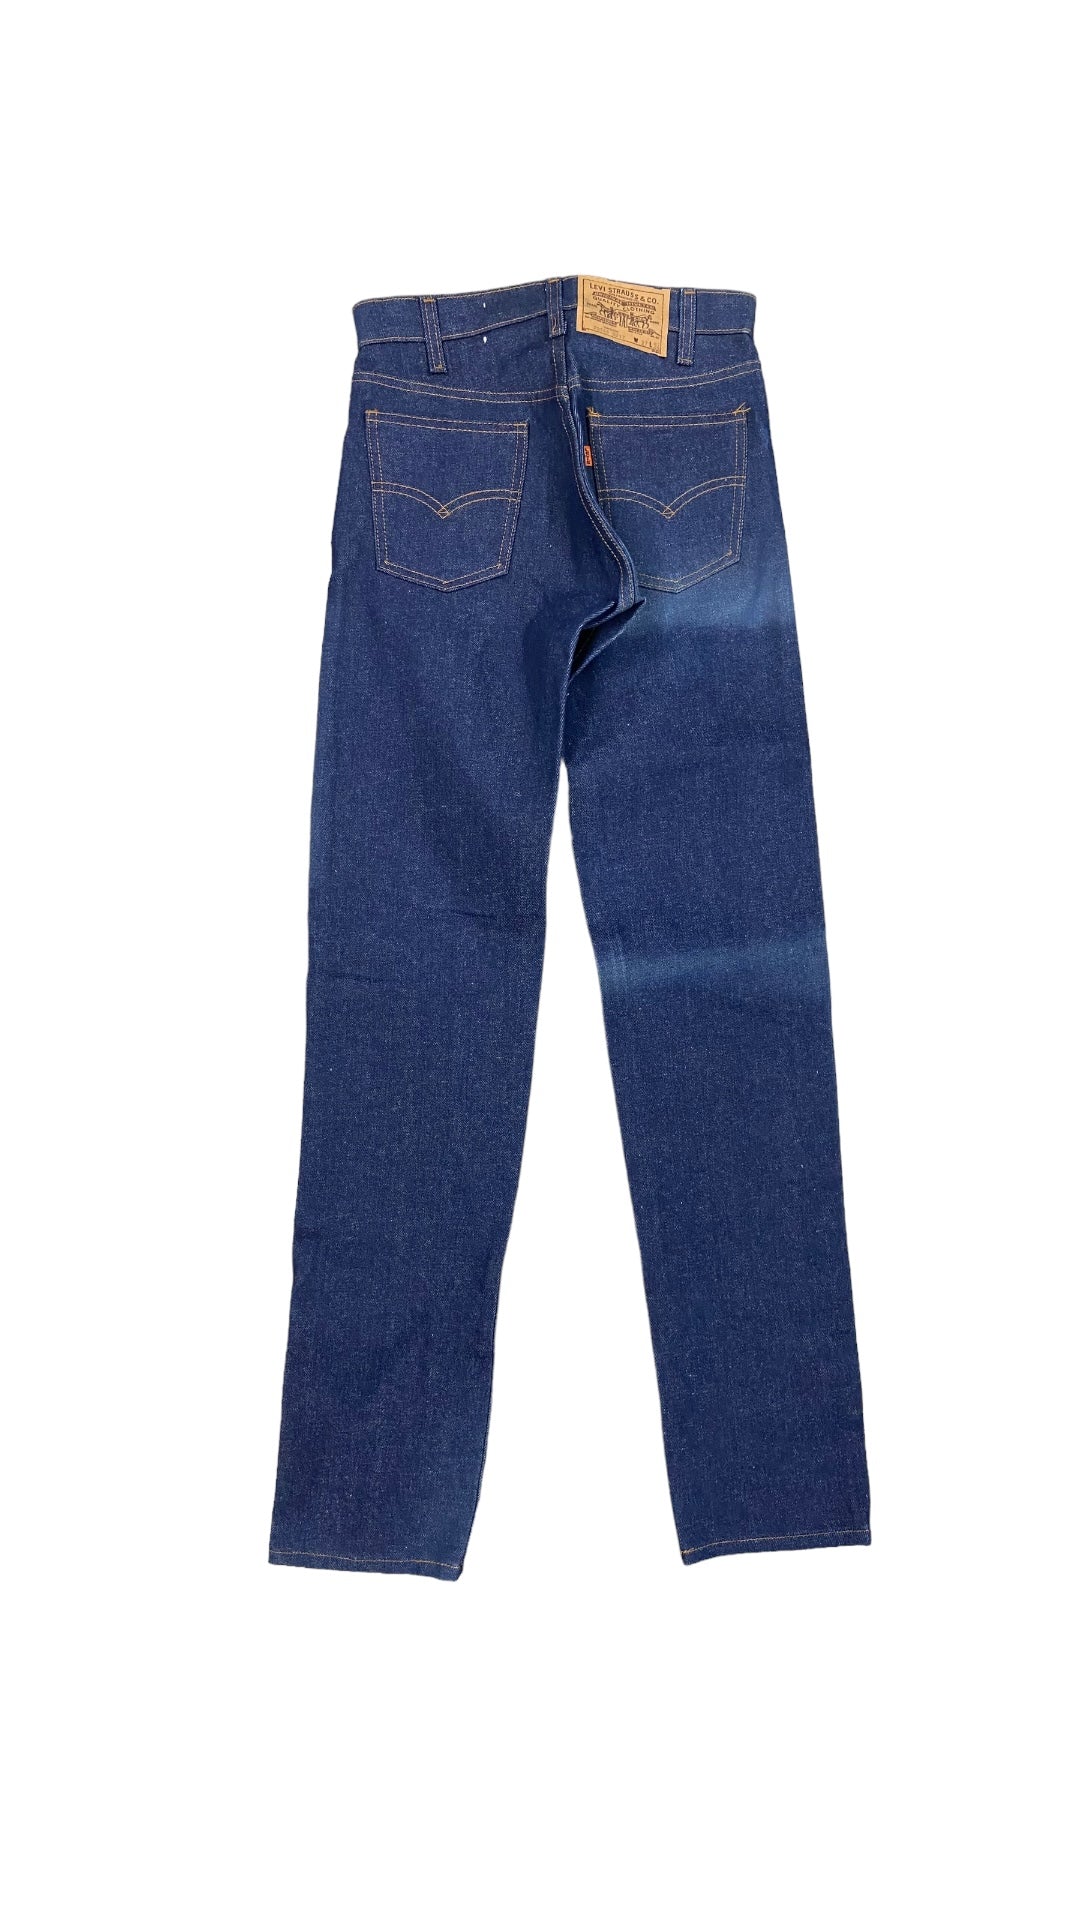 VTG Levi's Orange Tab Straight Leg Original Fit Jeans Sz 27x34